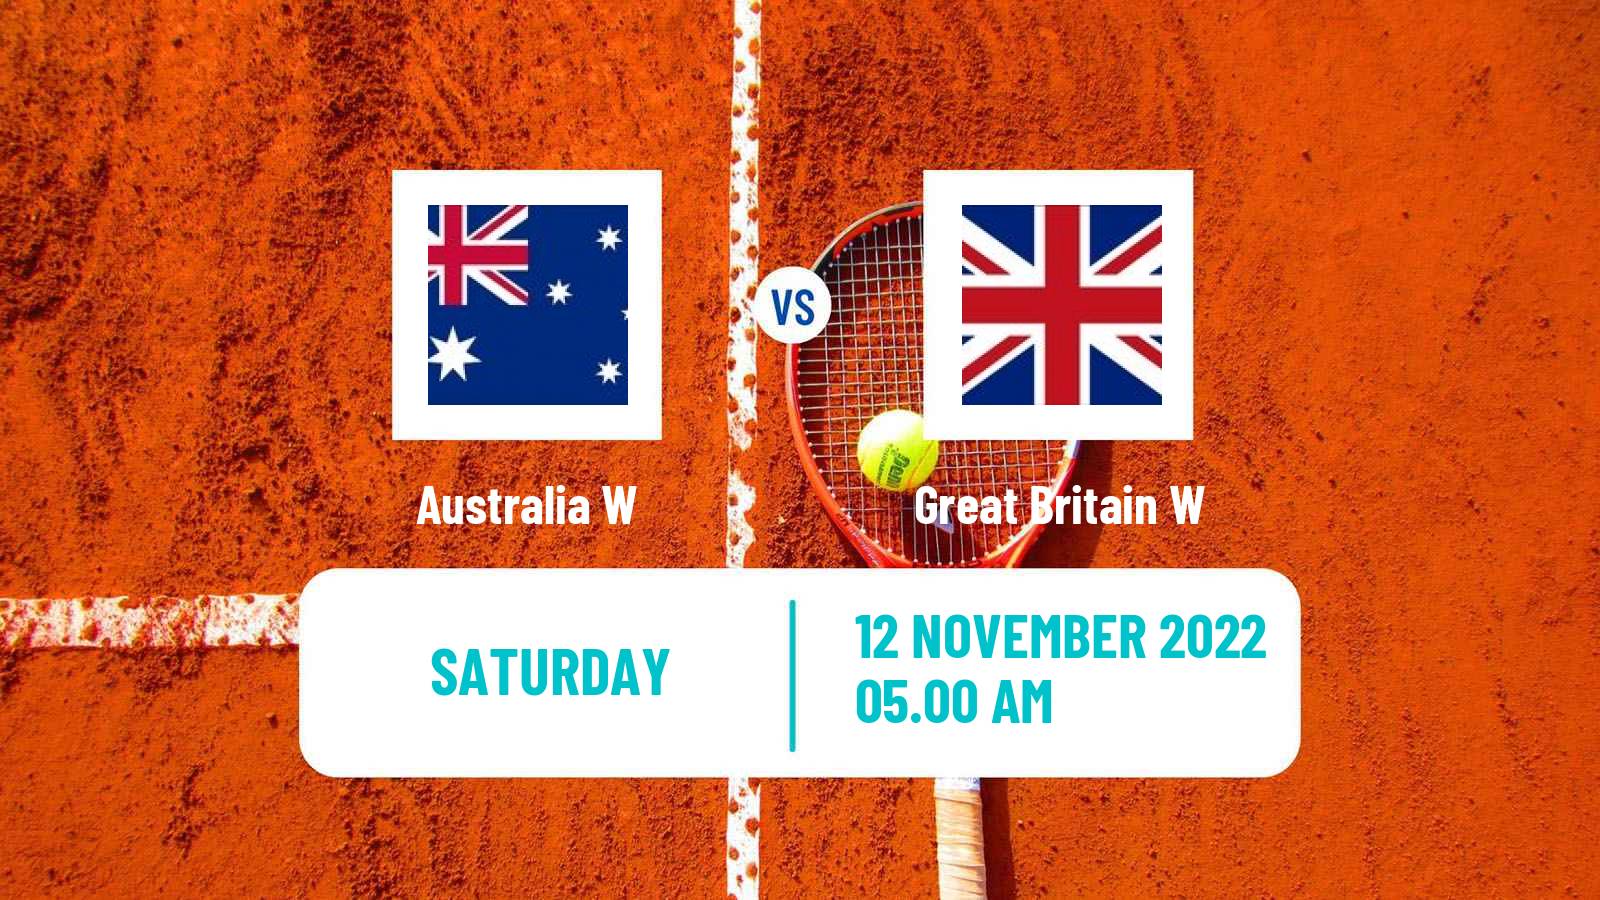 Tennis WTA Billie Jean King Cup World Group Teams Australia W - Great Britain W